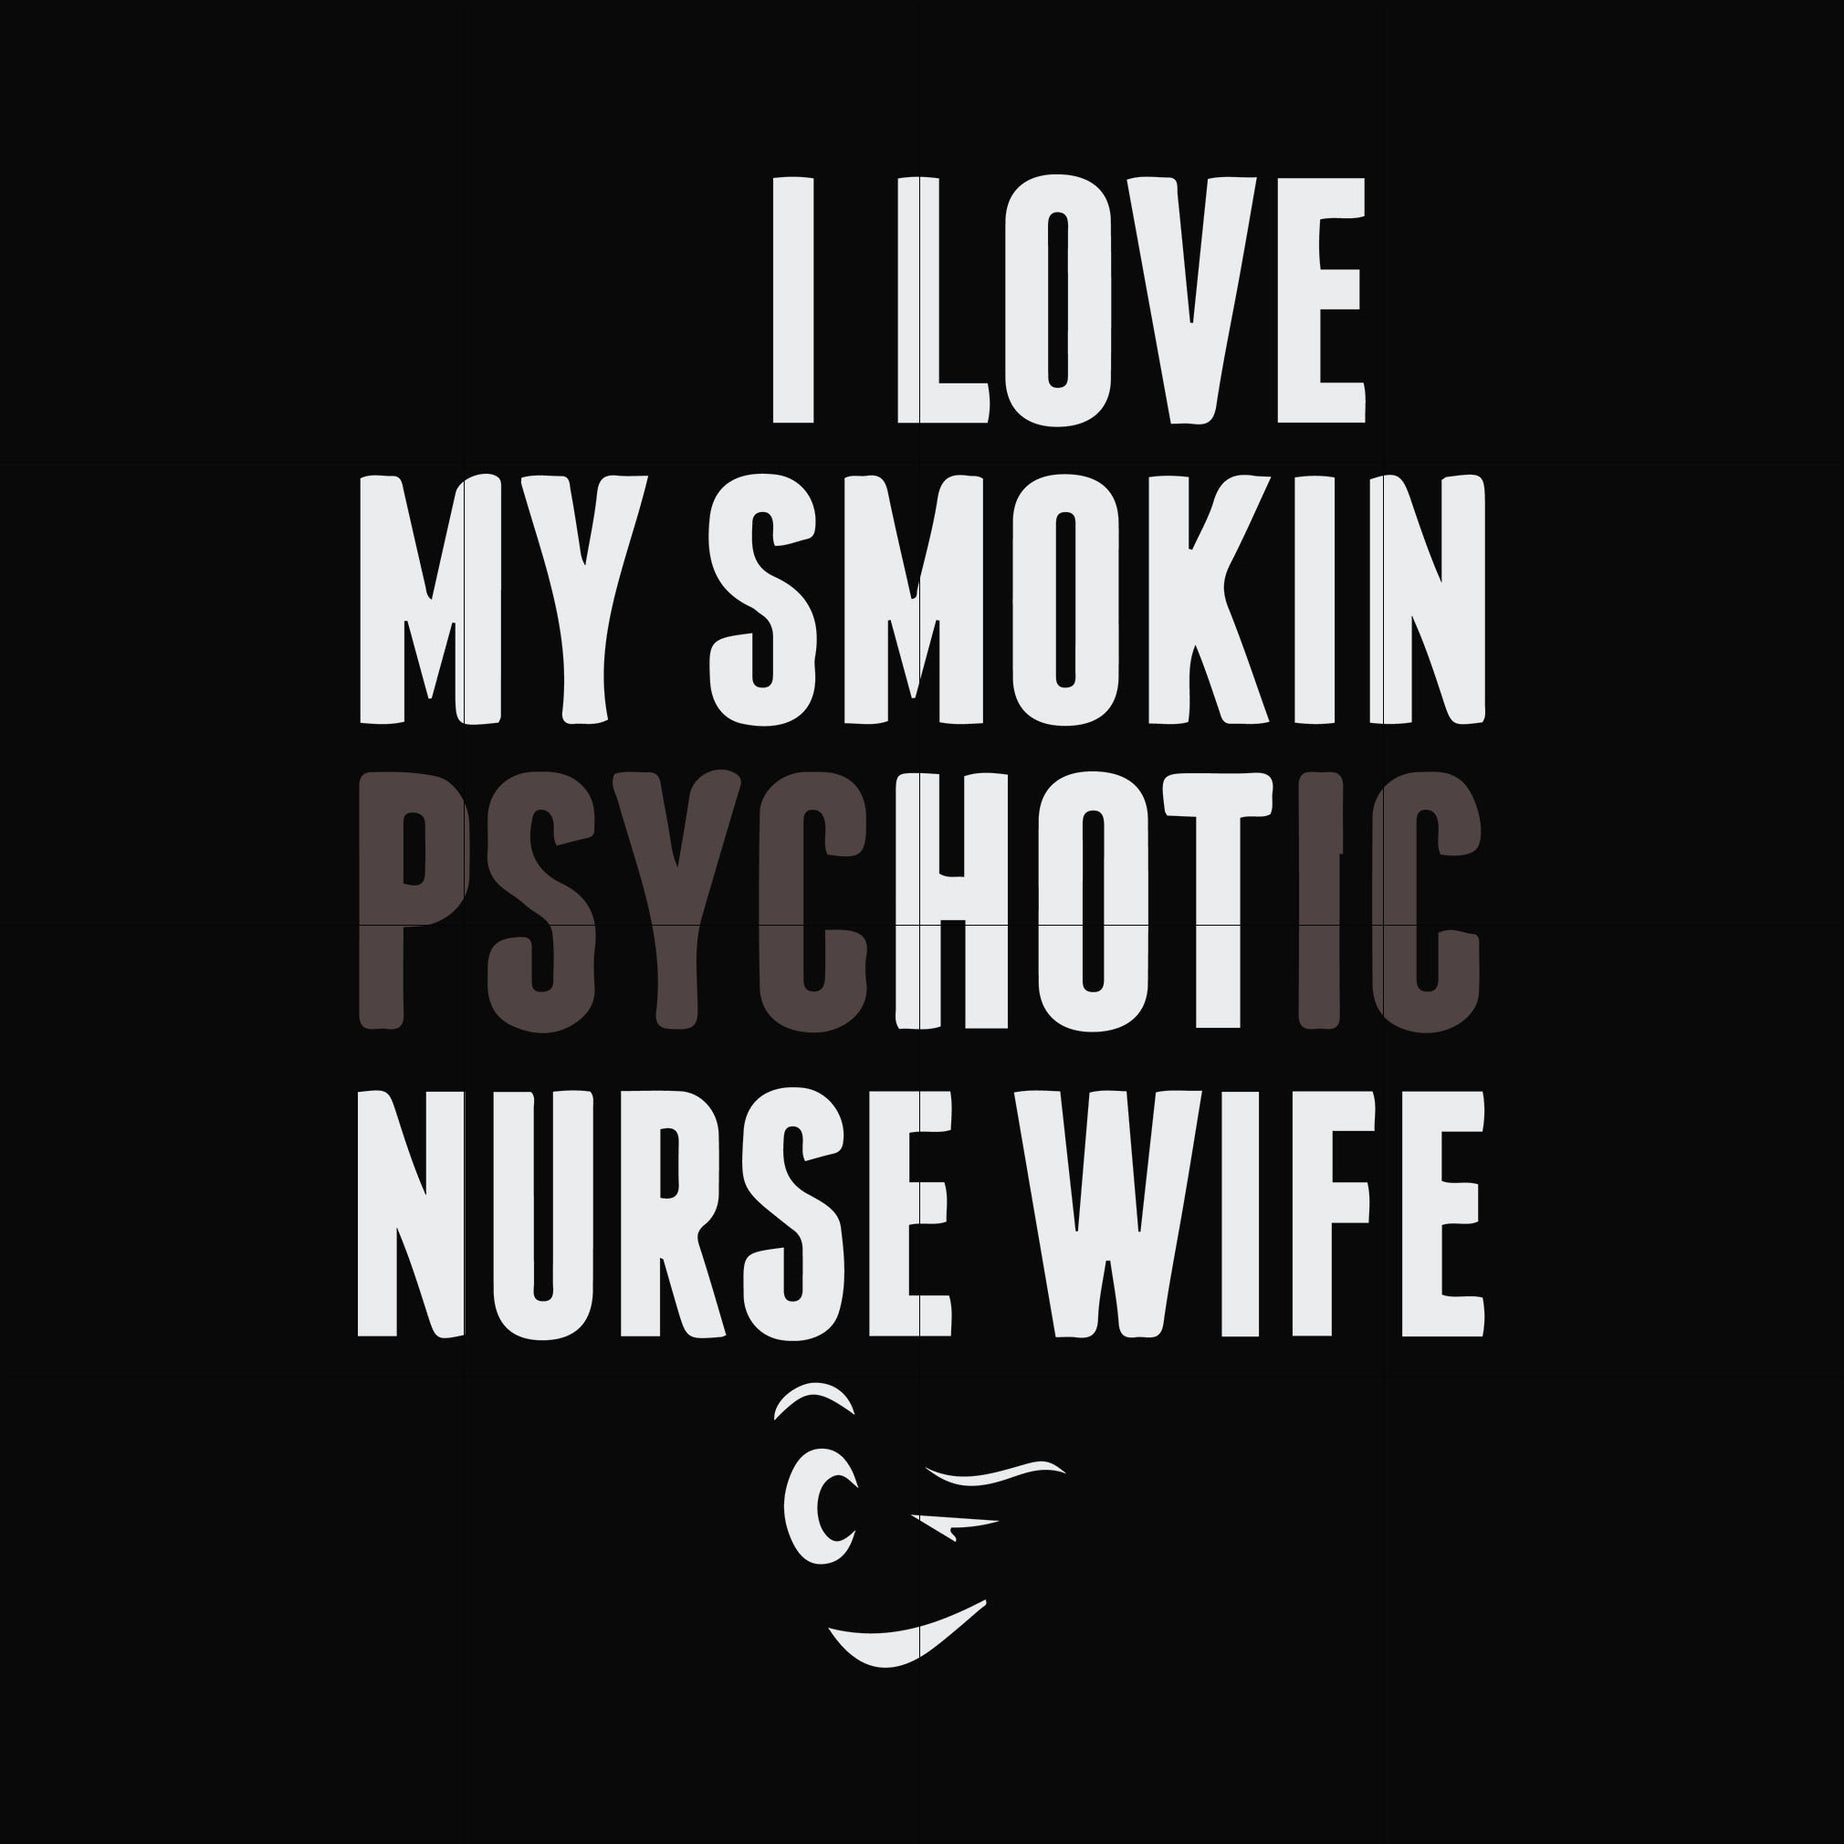 I love my smokin psychotic nurse wife svg, png, dxf, eps file FN000814